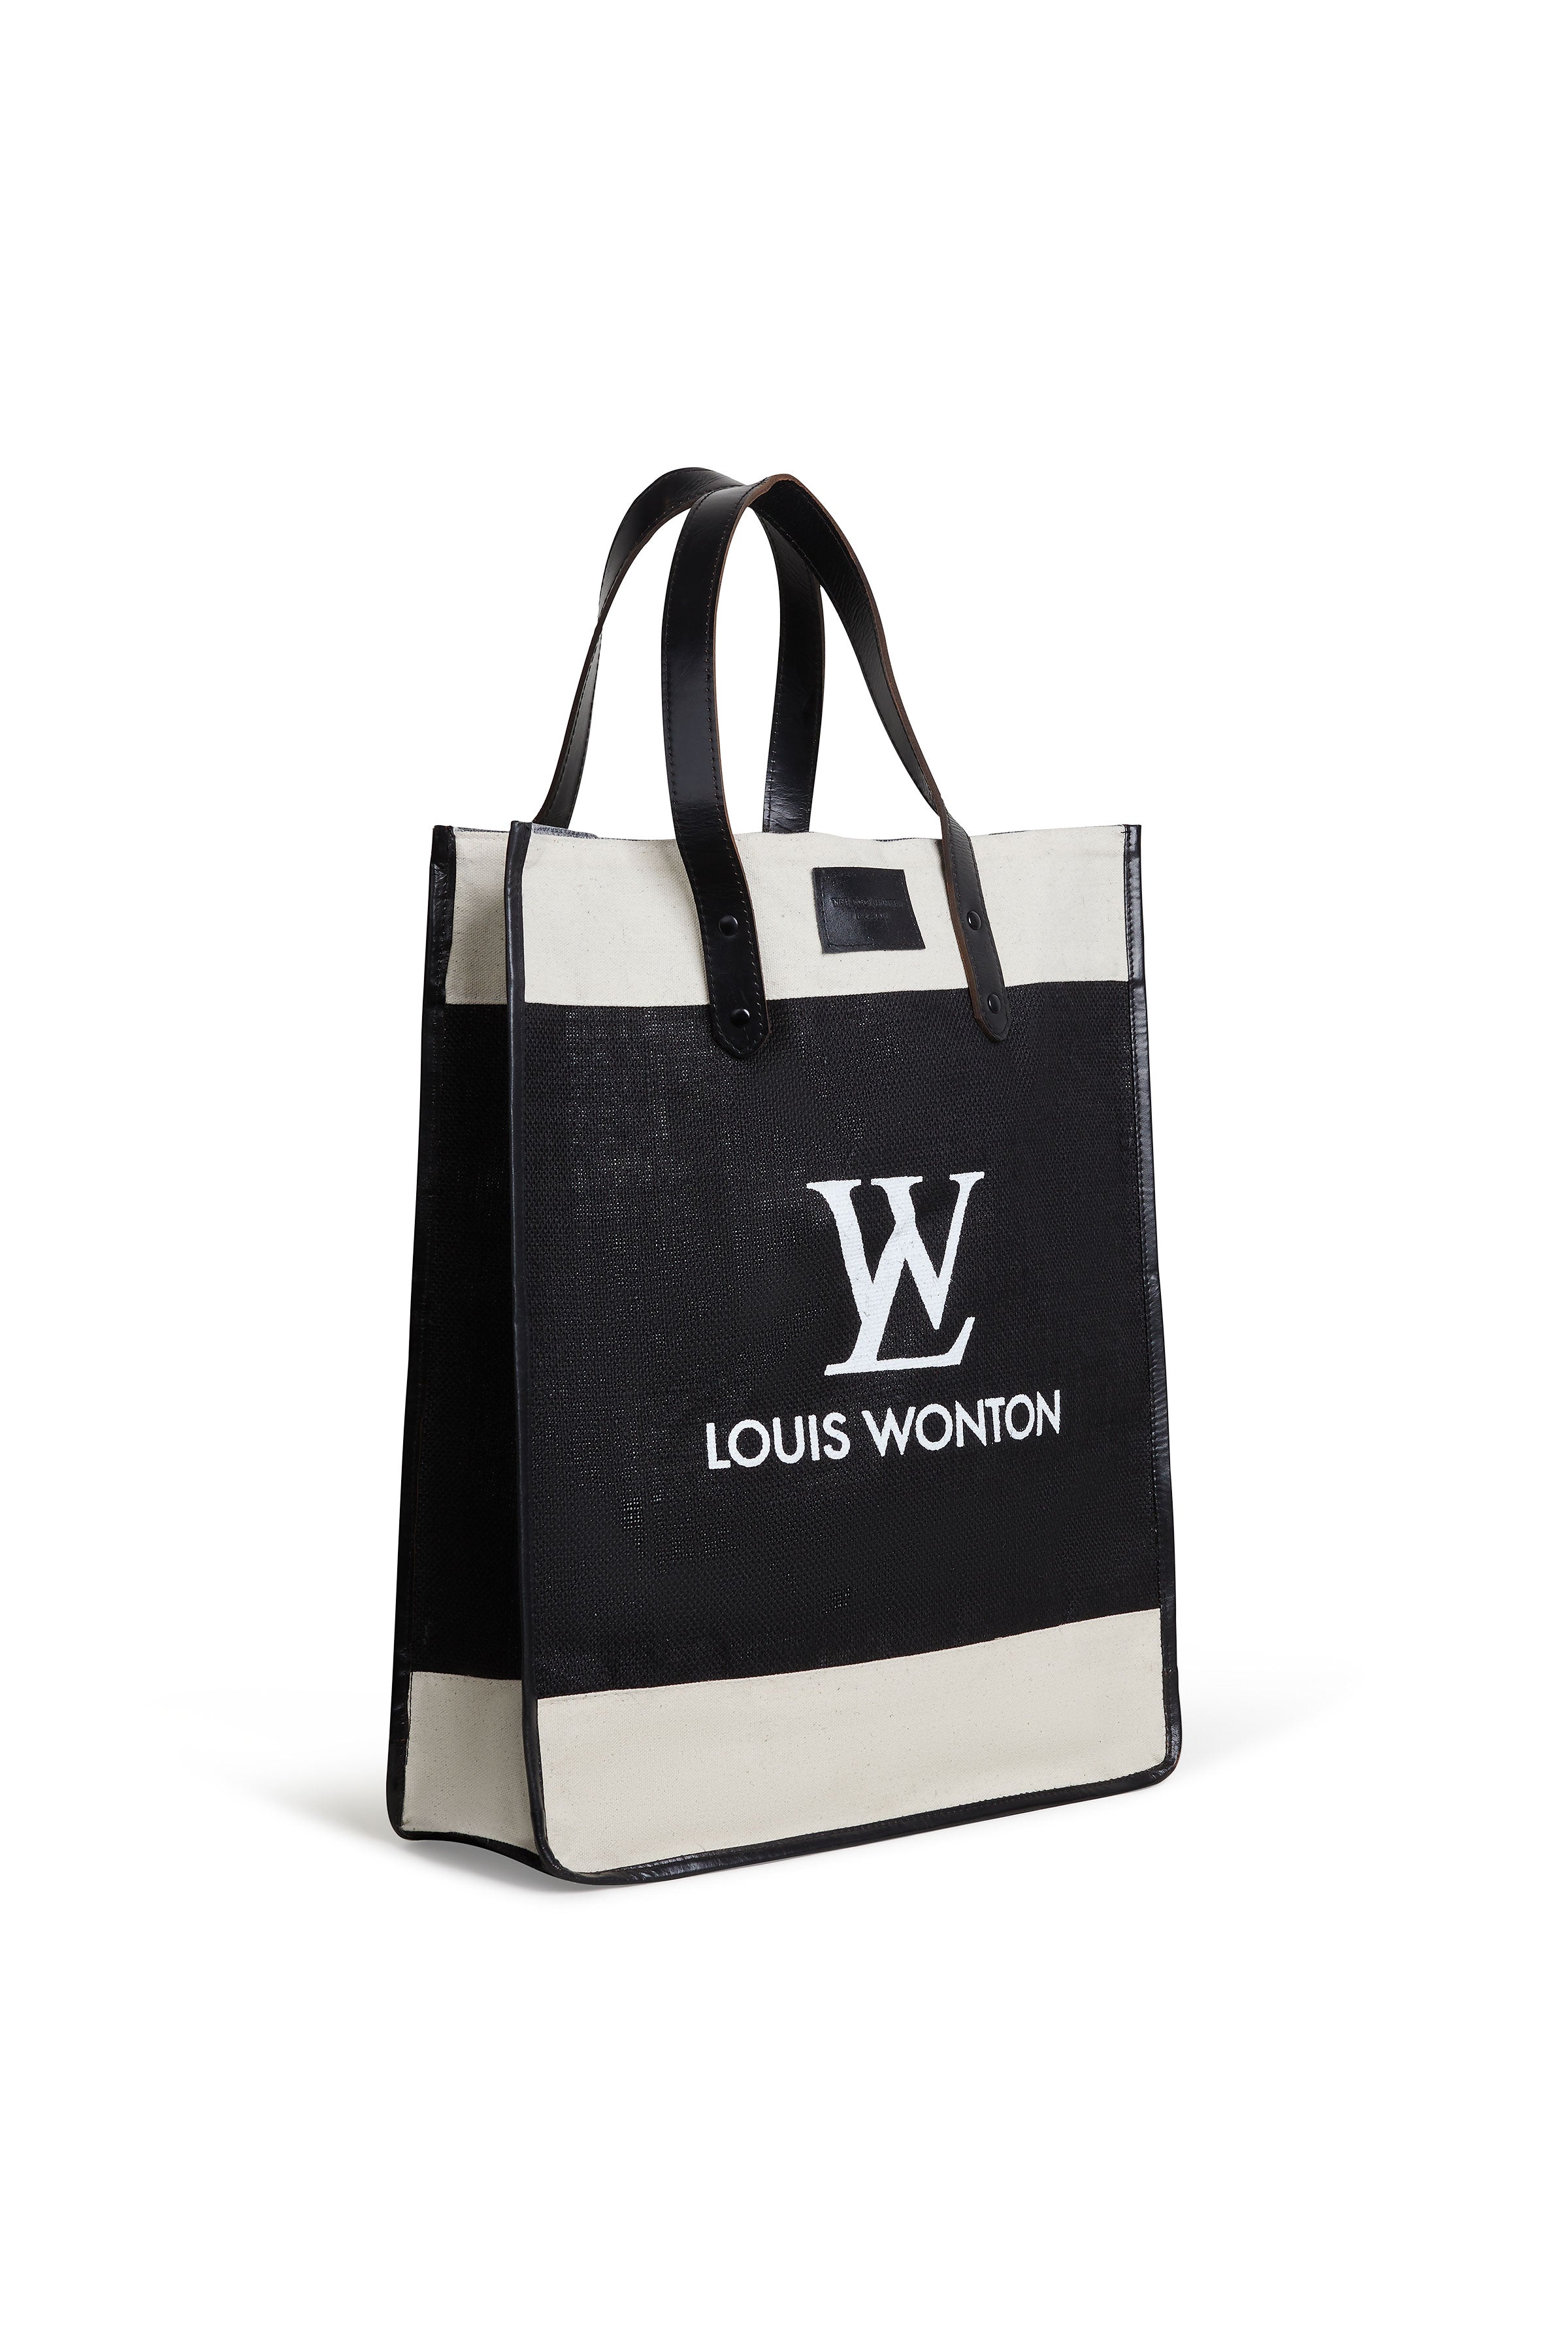 The Cool Hunter Market Bag Black Leather - Louis Wonton - NEW